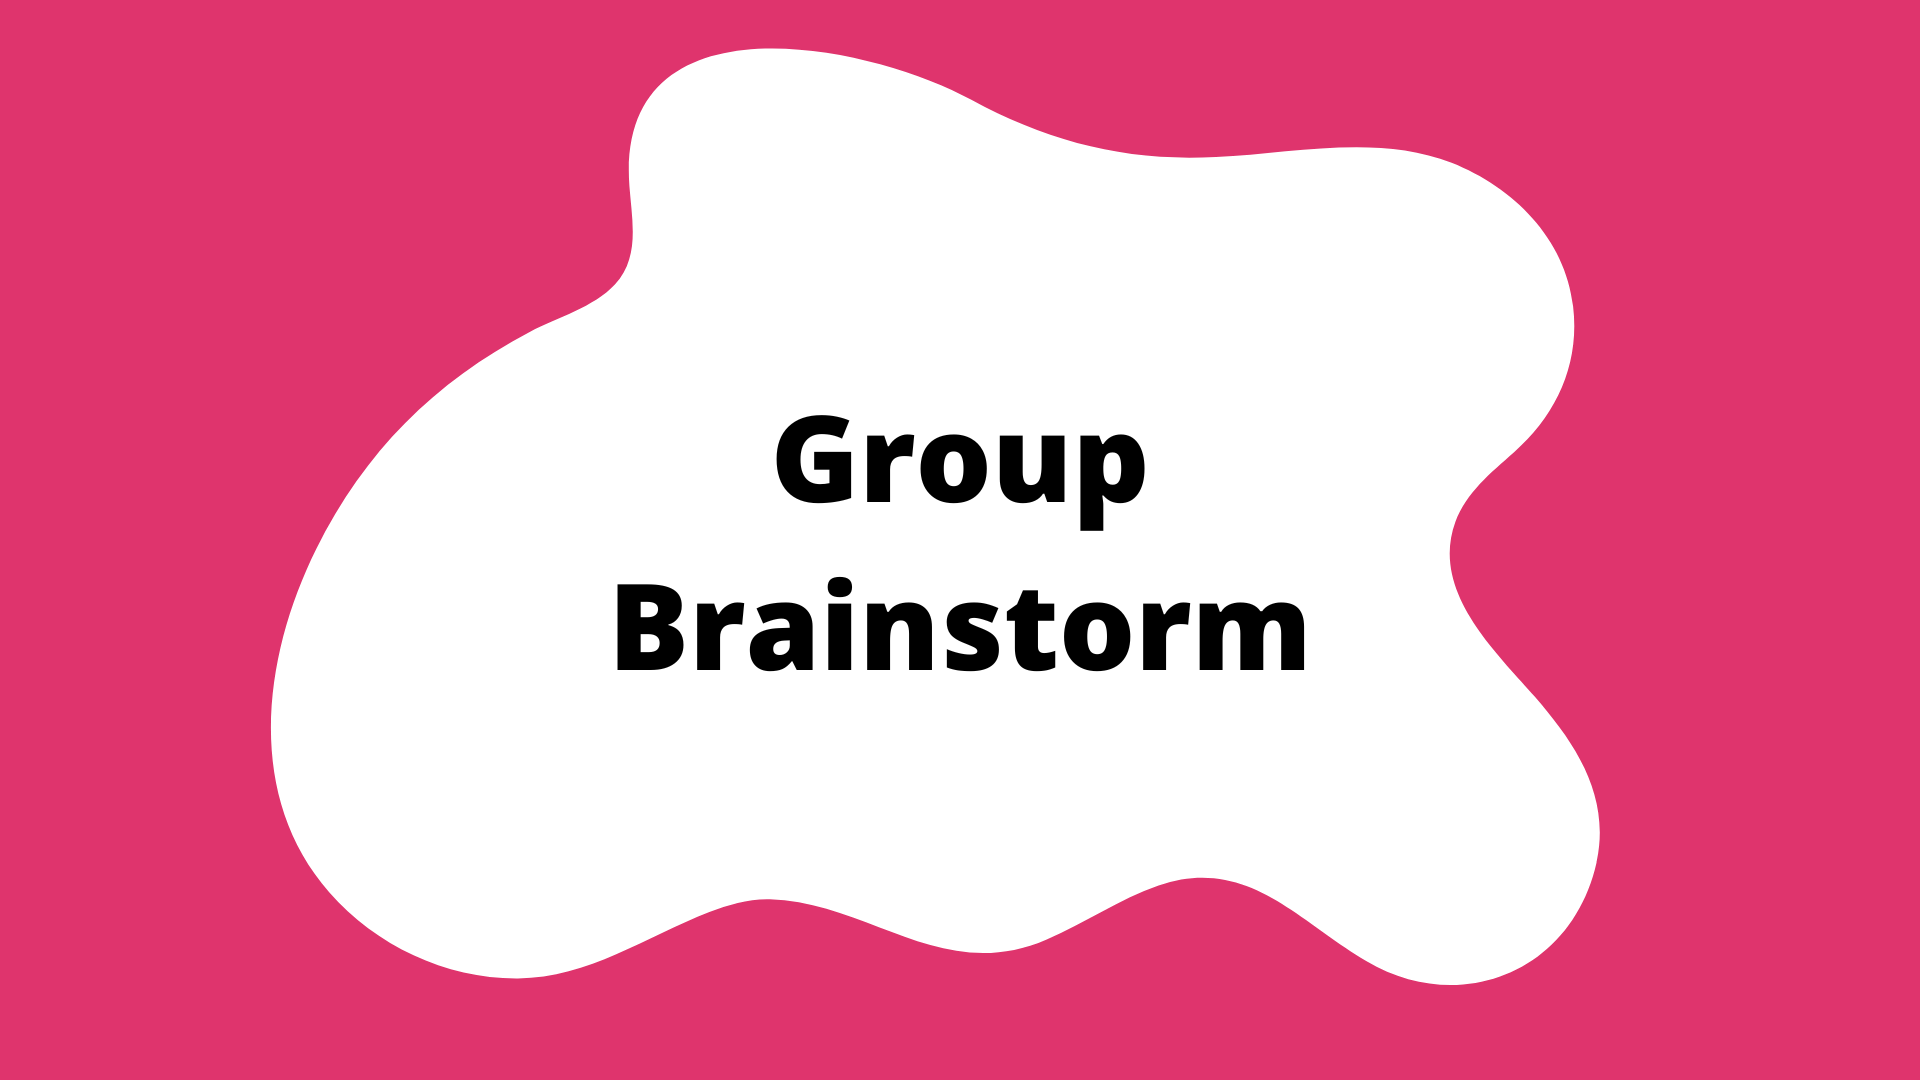 Group Brainstorm